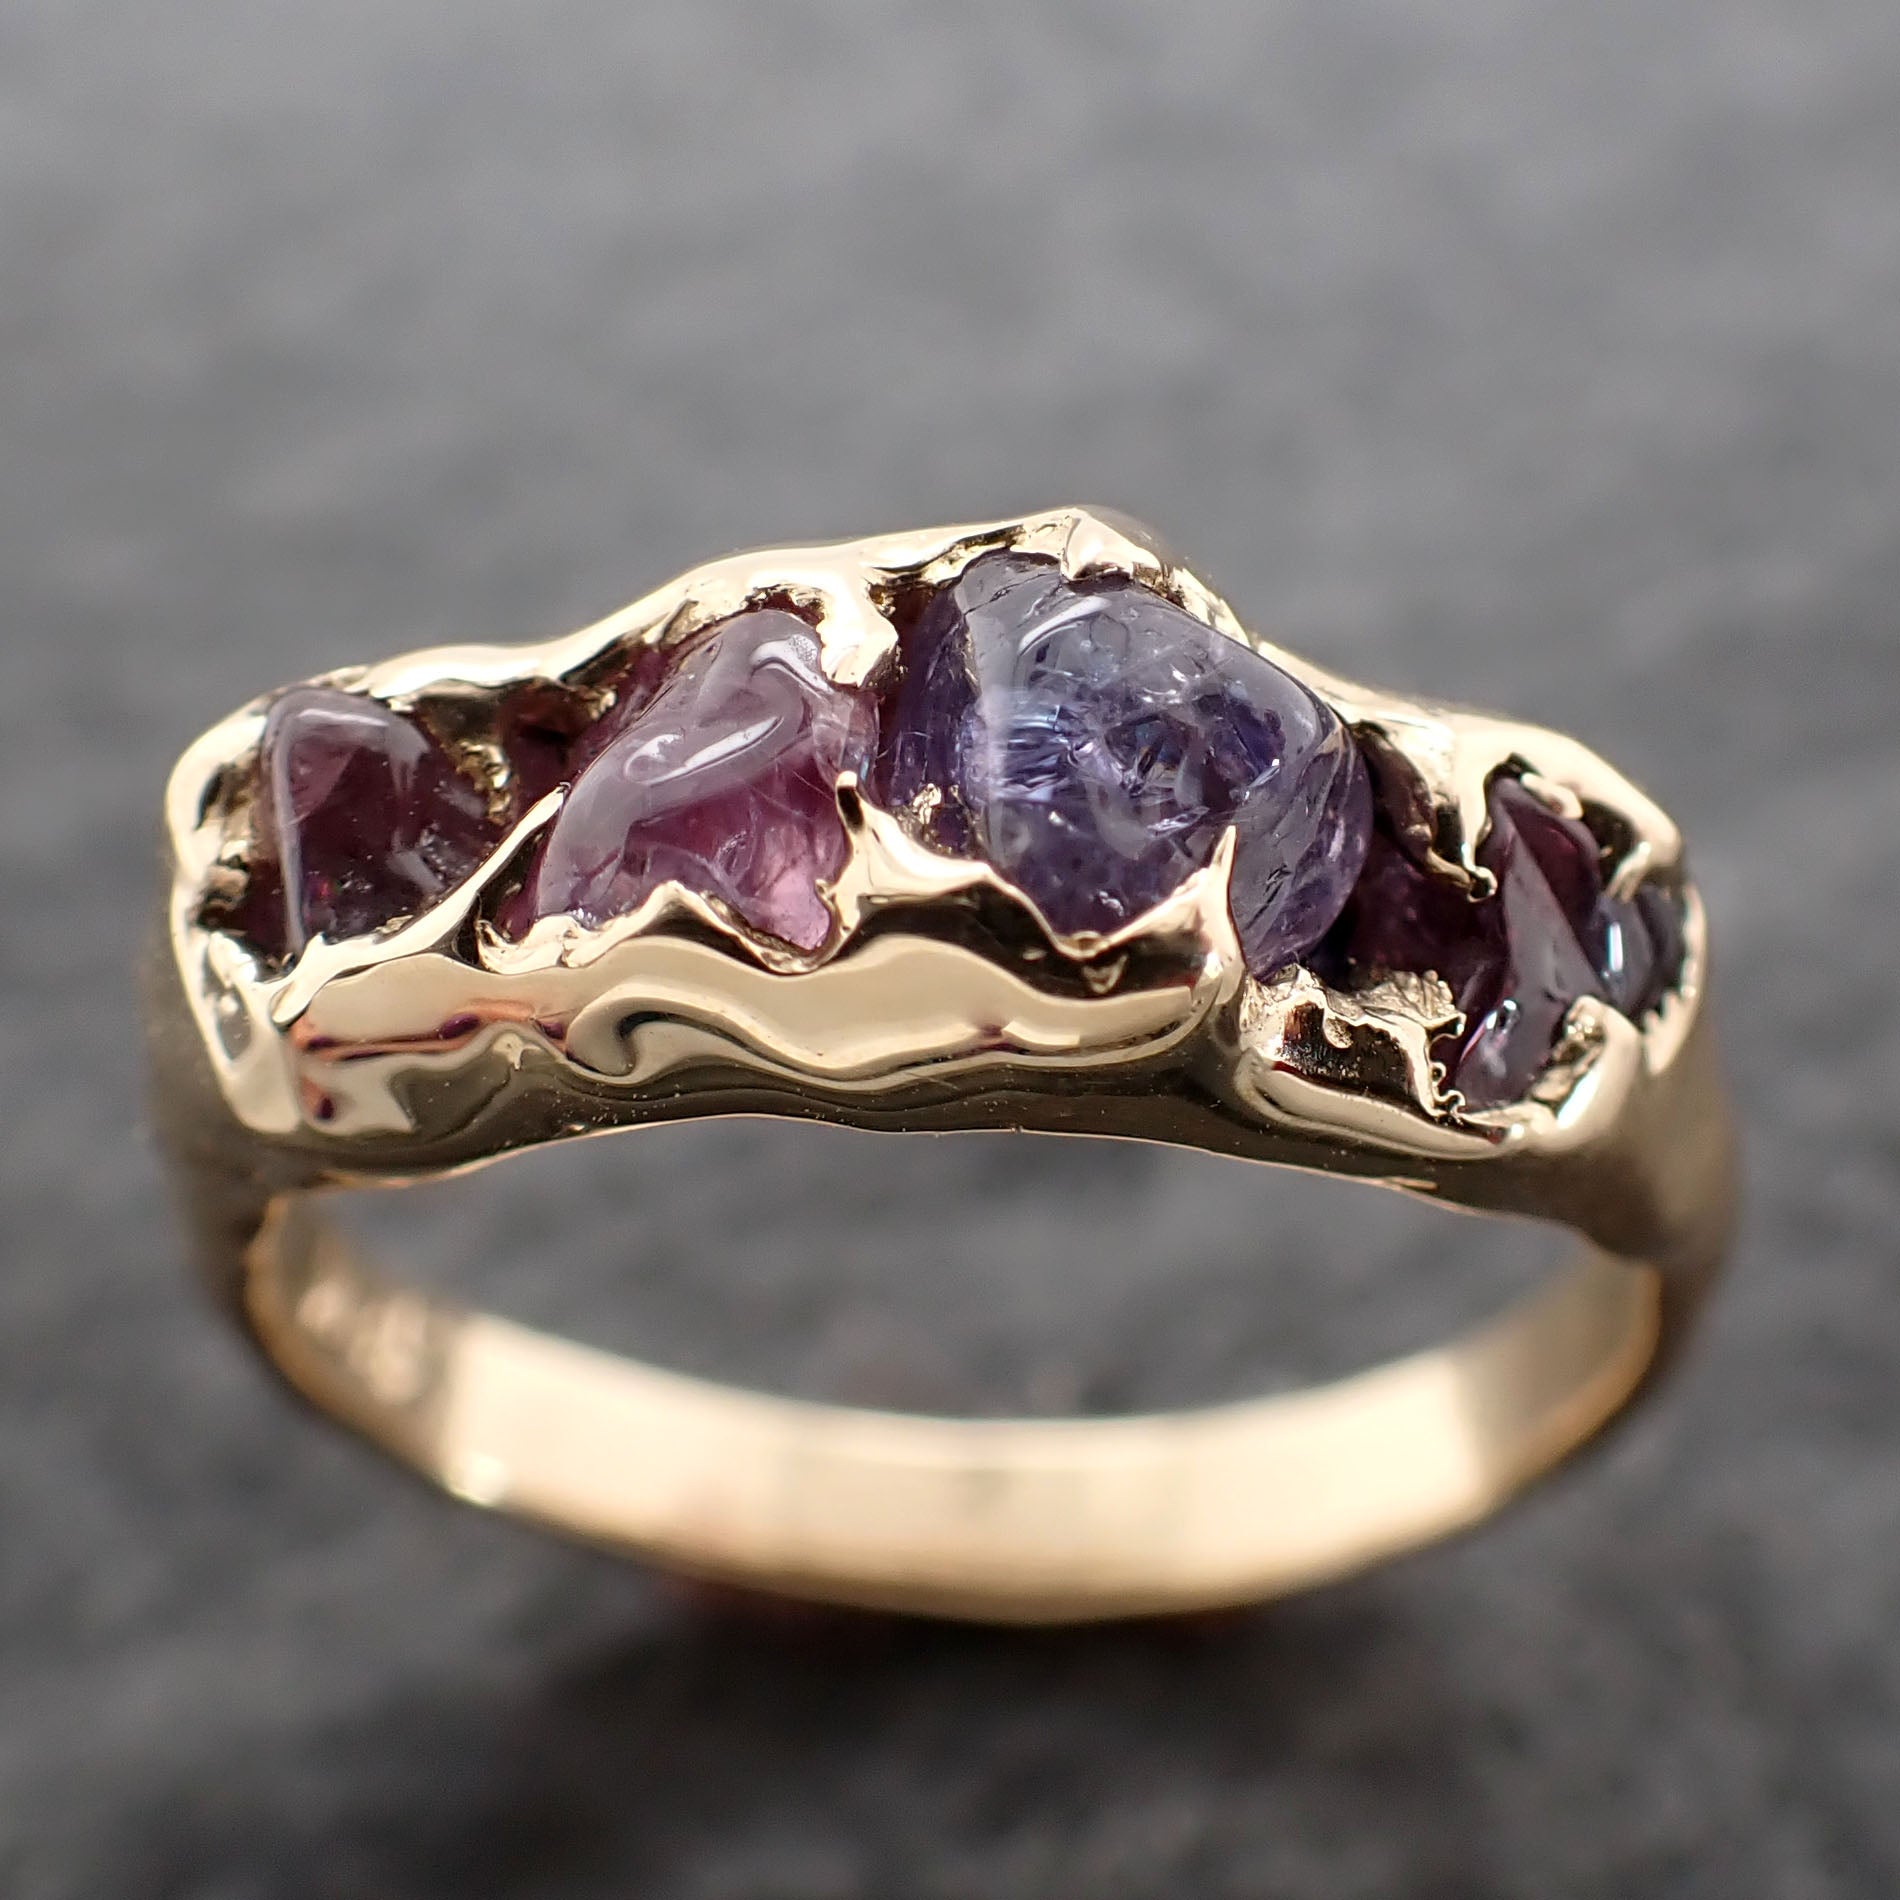 Sapphire Pebble candy purple lavendar violet polished 18k yellow gold gemstone band 2657